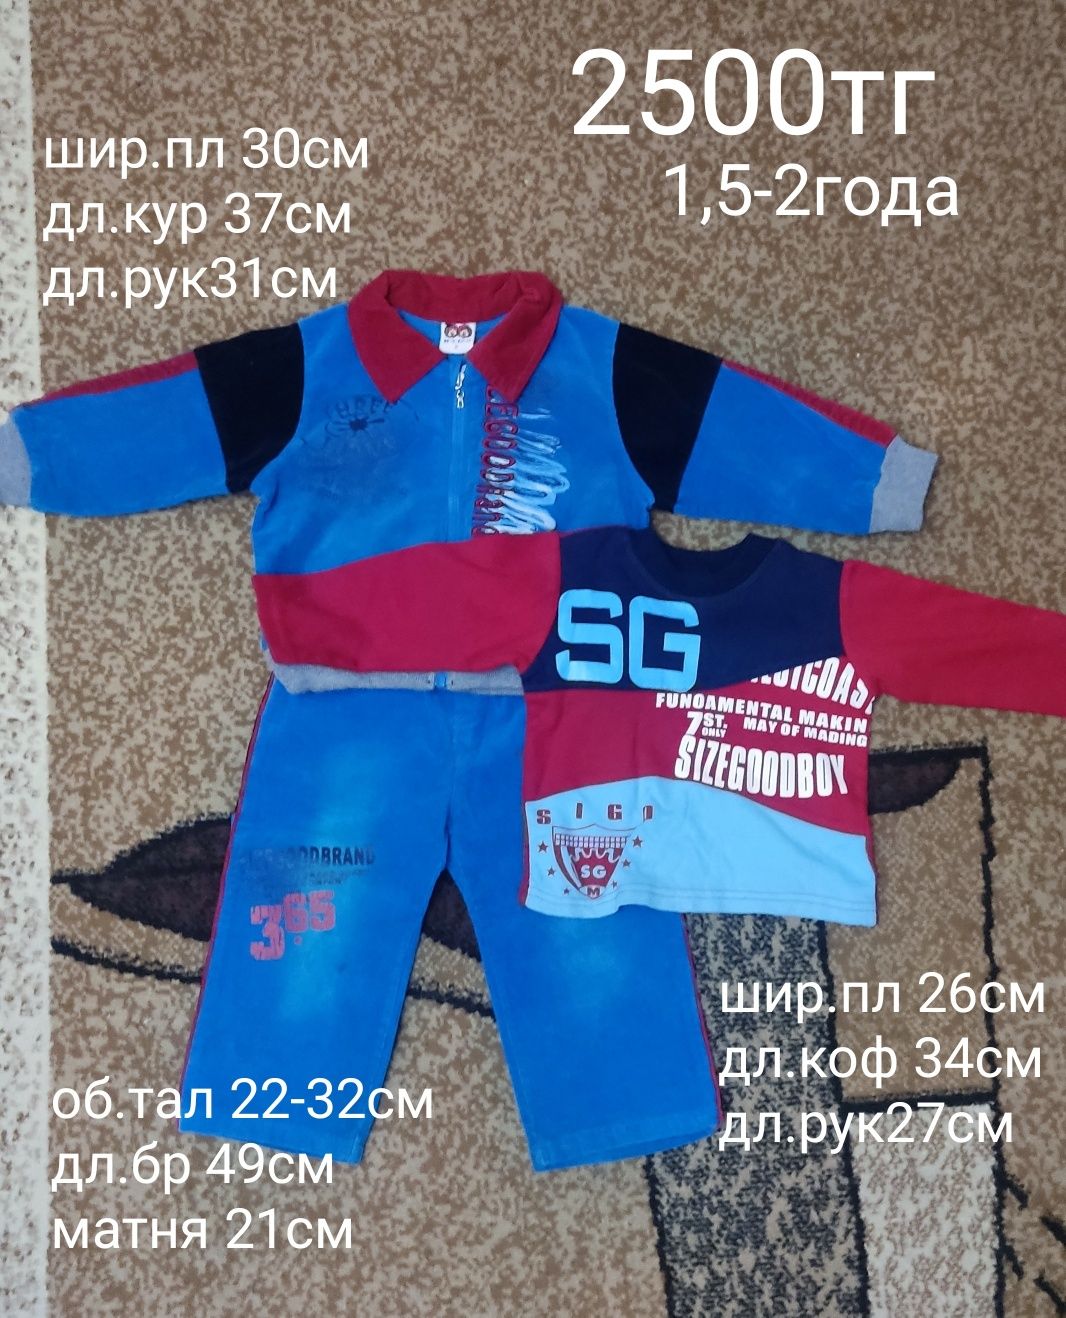 Детские рубашки,штаны и костюмчики 2г,3г,7-8л